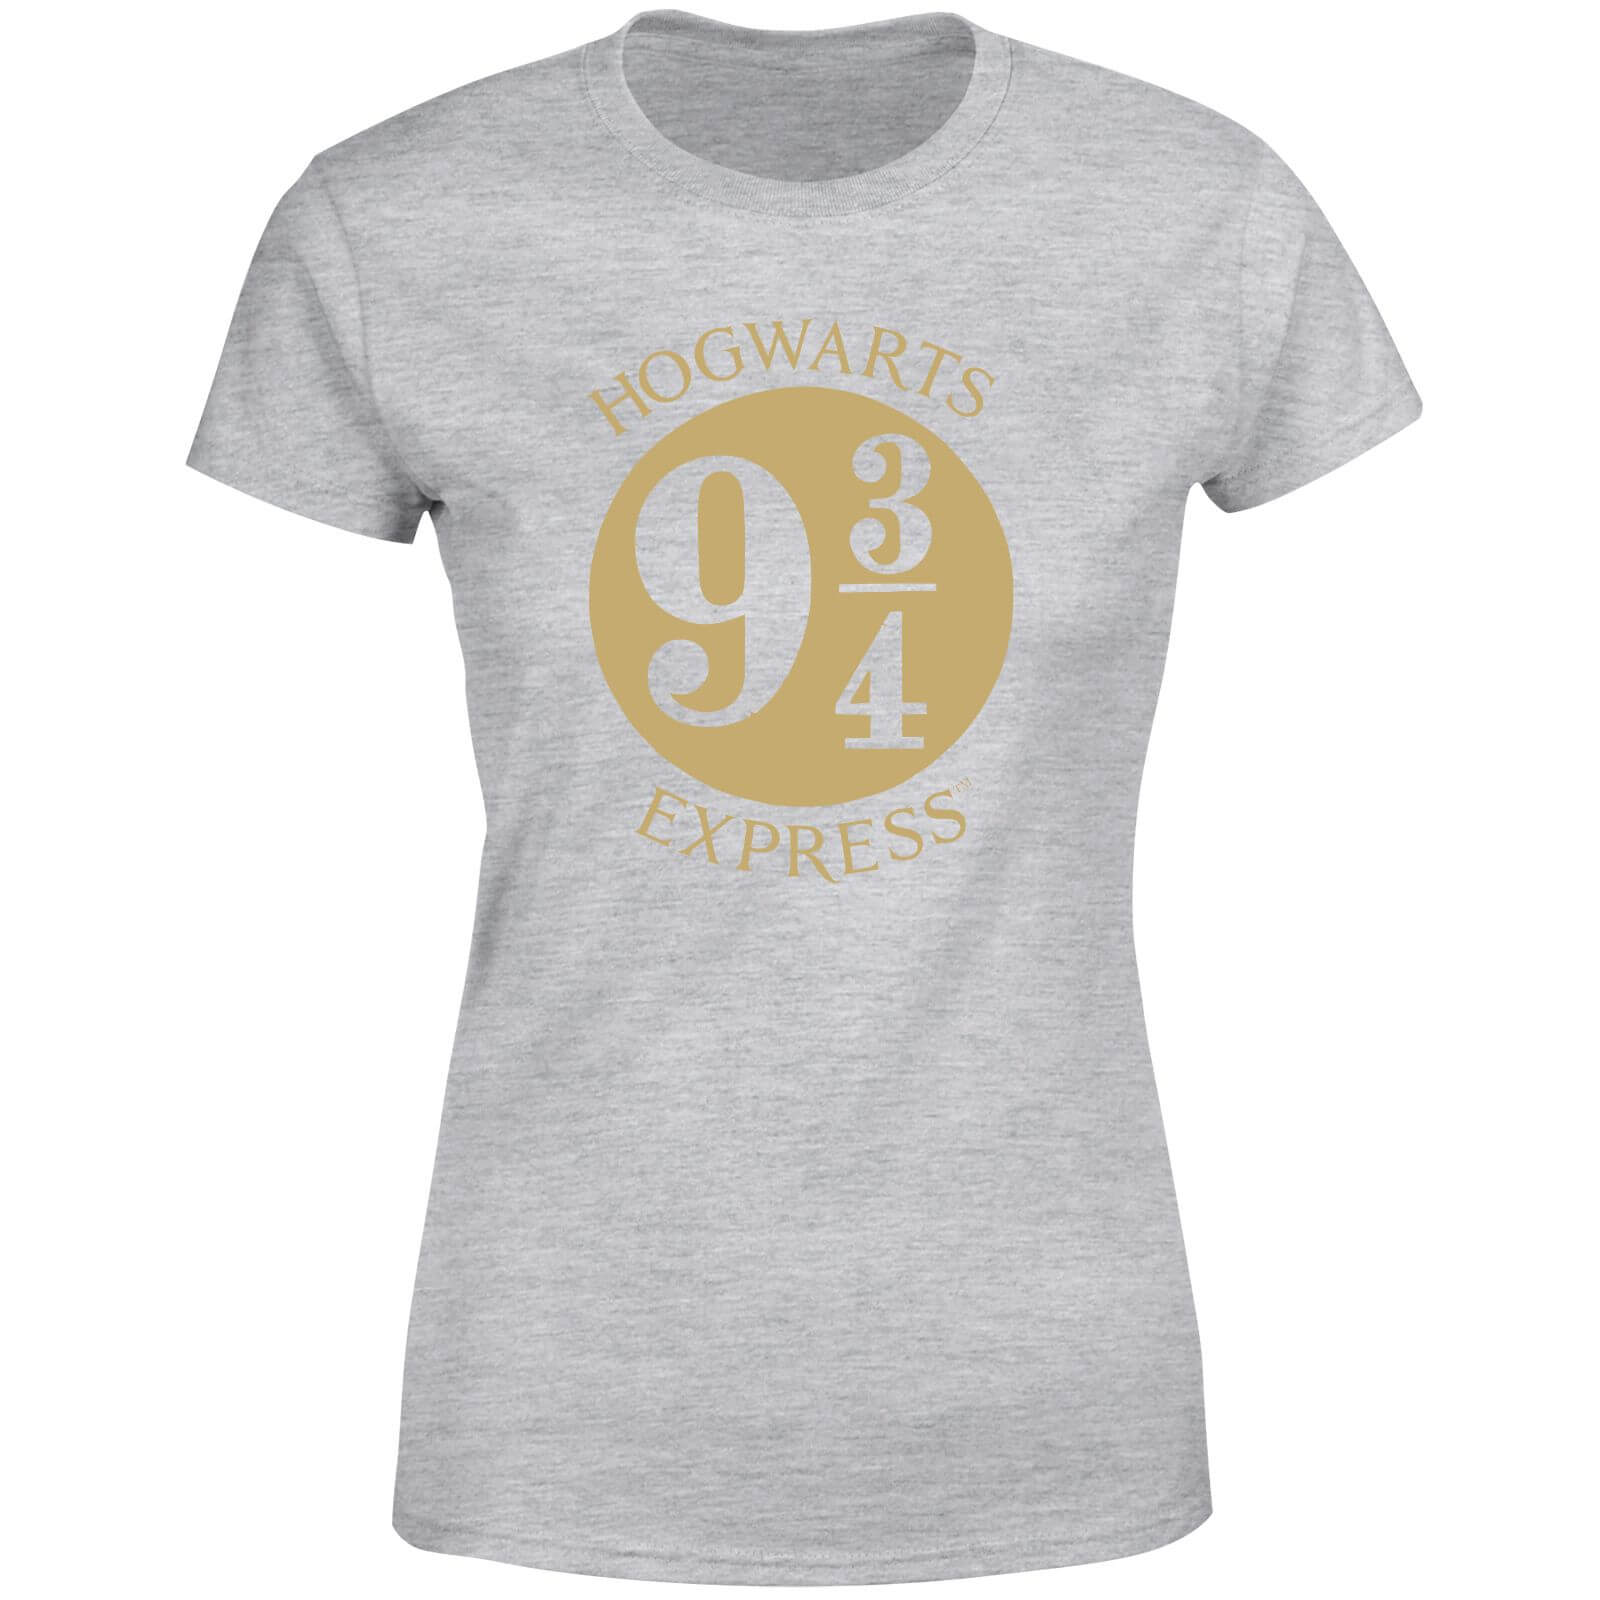 Harry Potter Platform Women's T-Shirt - Grey - XS - Grey